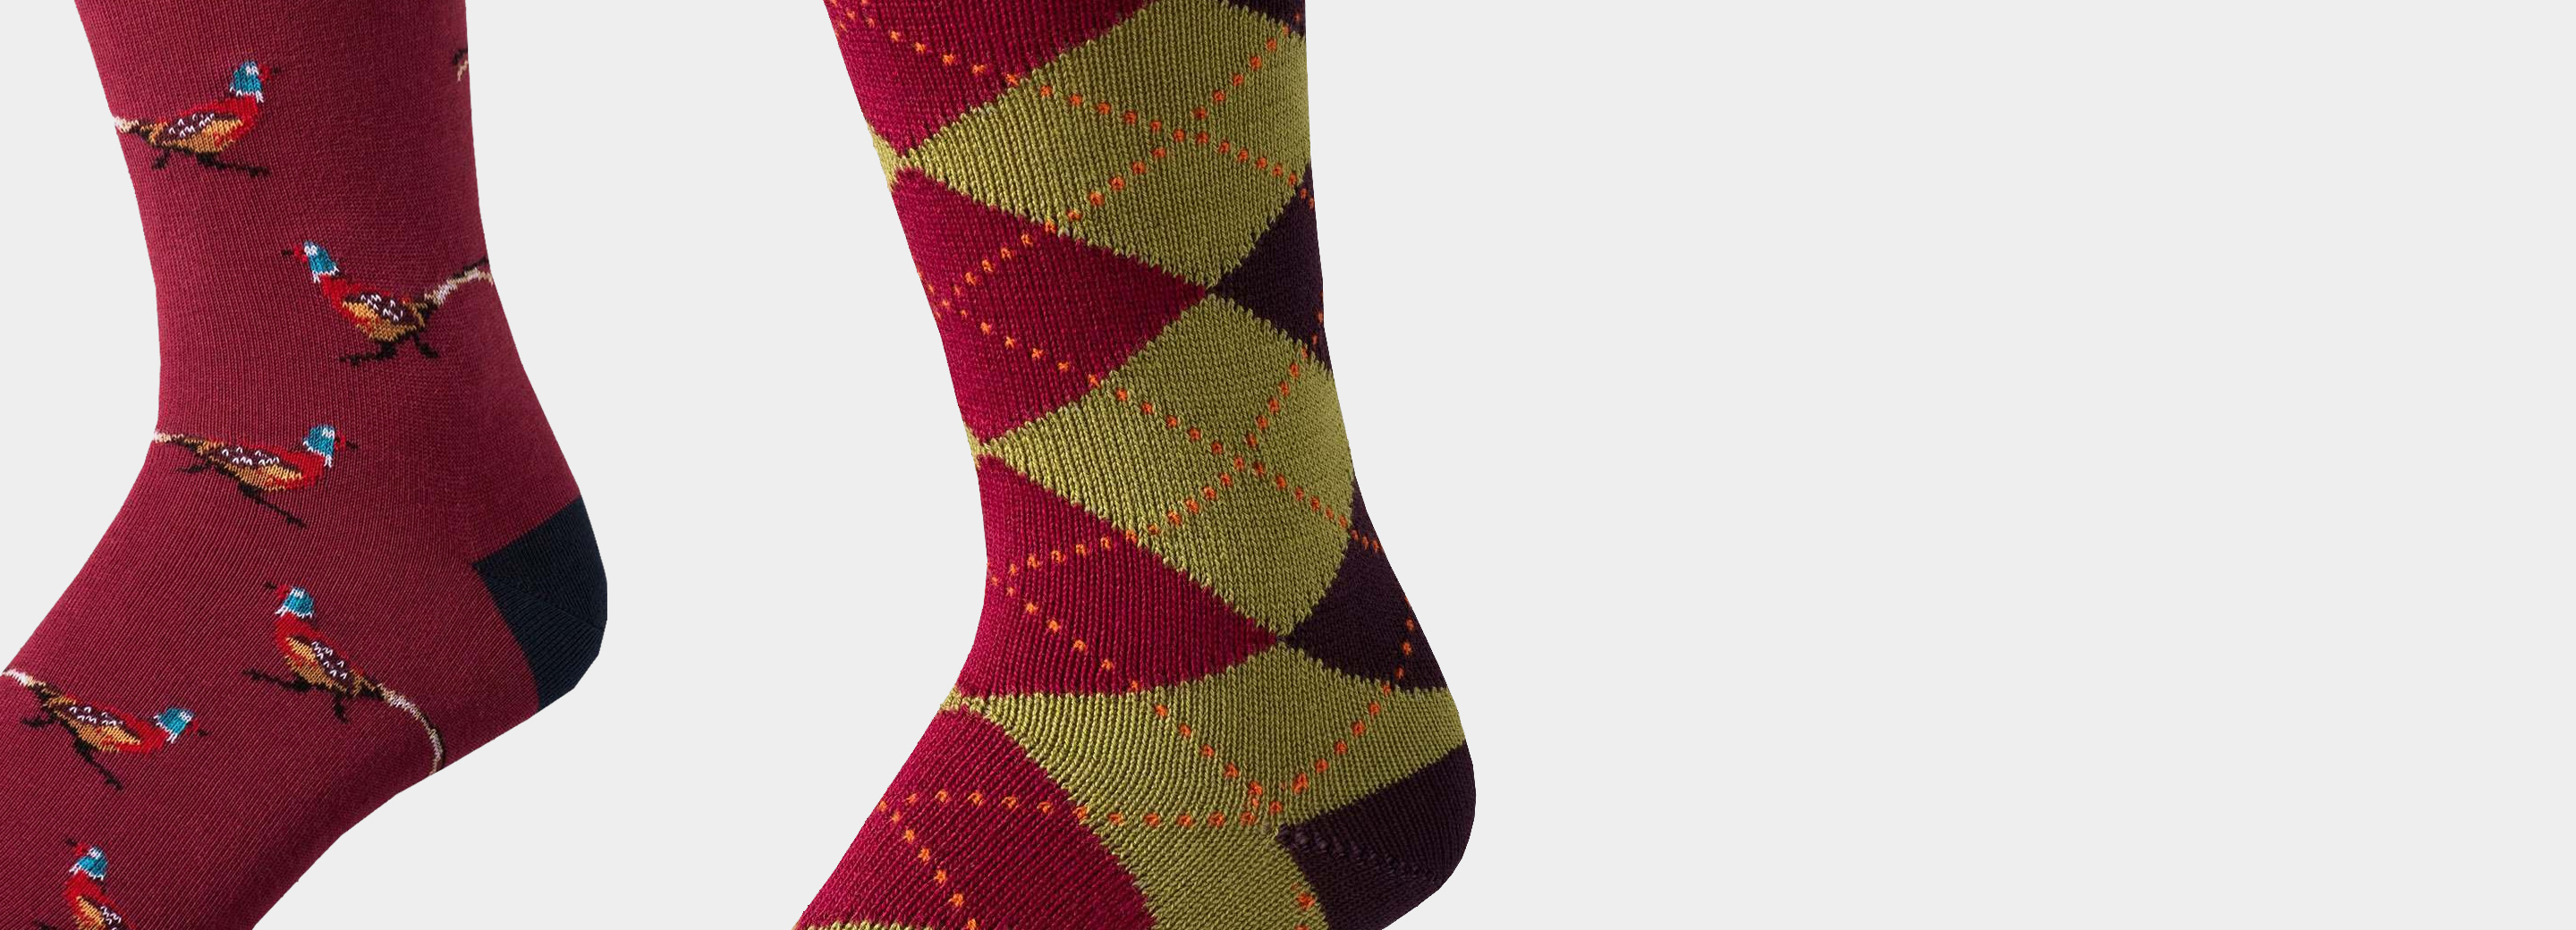 Men's Patterned Cotton Socks